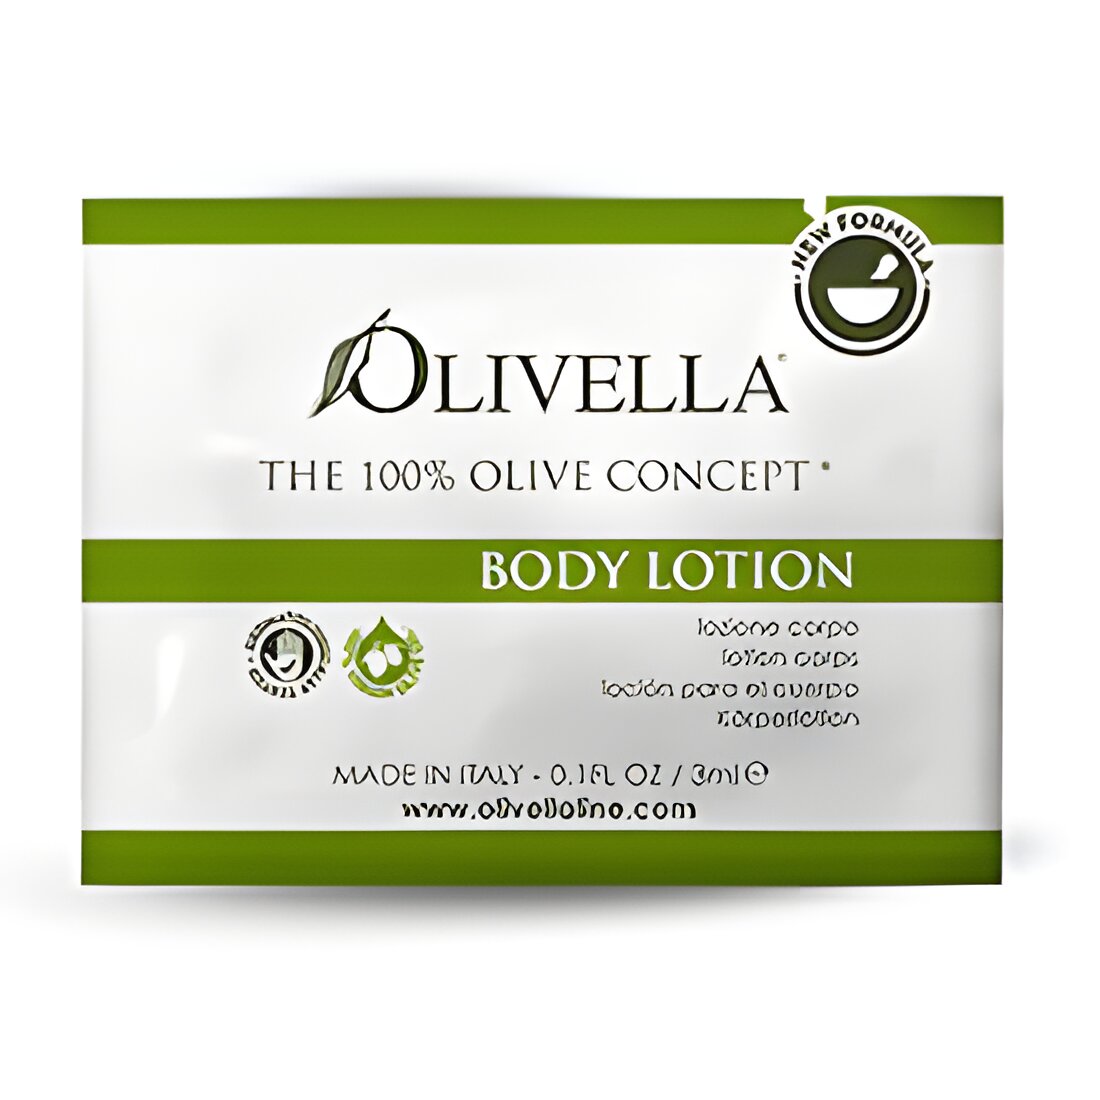 Free Olivella Body Lotion Sample